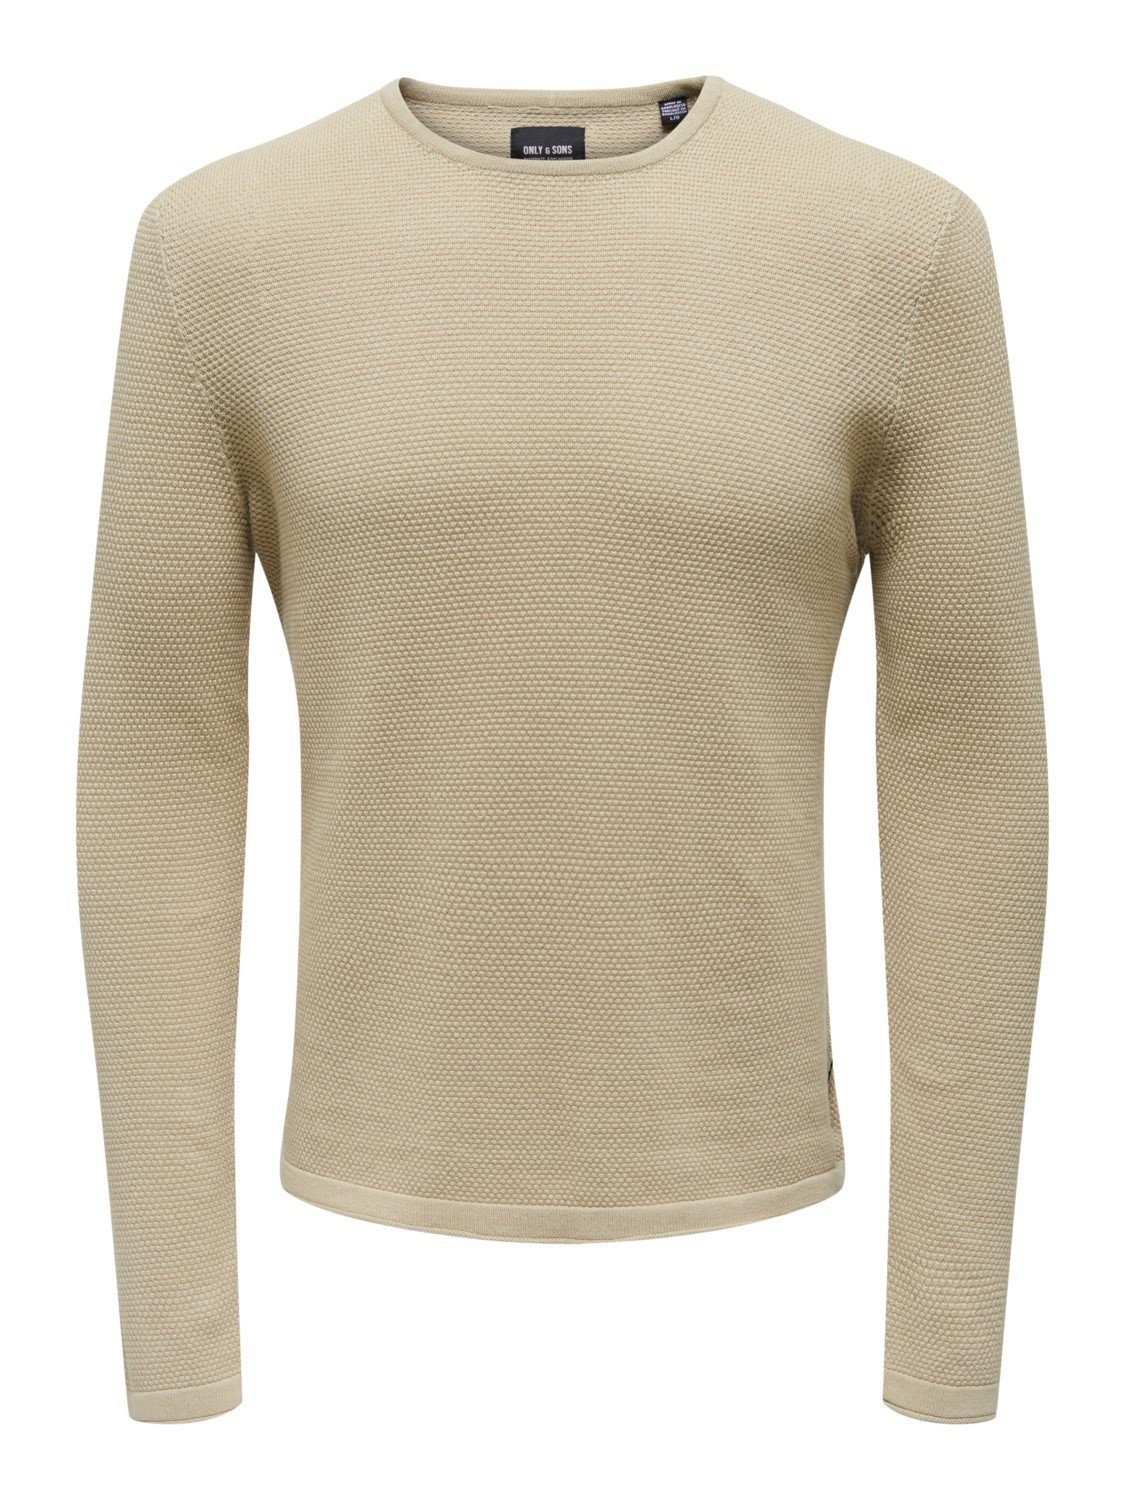 Langarm Basic 4421 ONSPANTER Sweater Dünner in ONLY Rundhals Strickpullover Beige Strickpullover SONS &